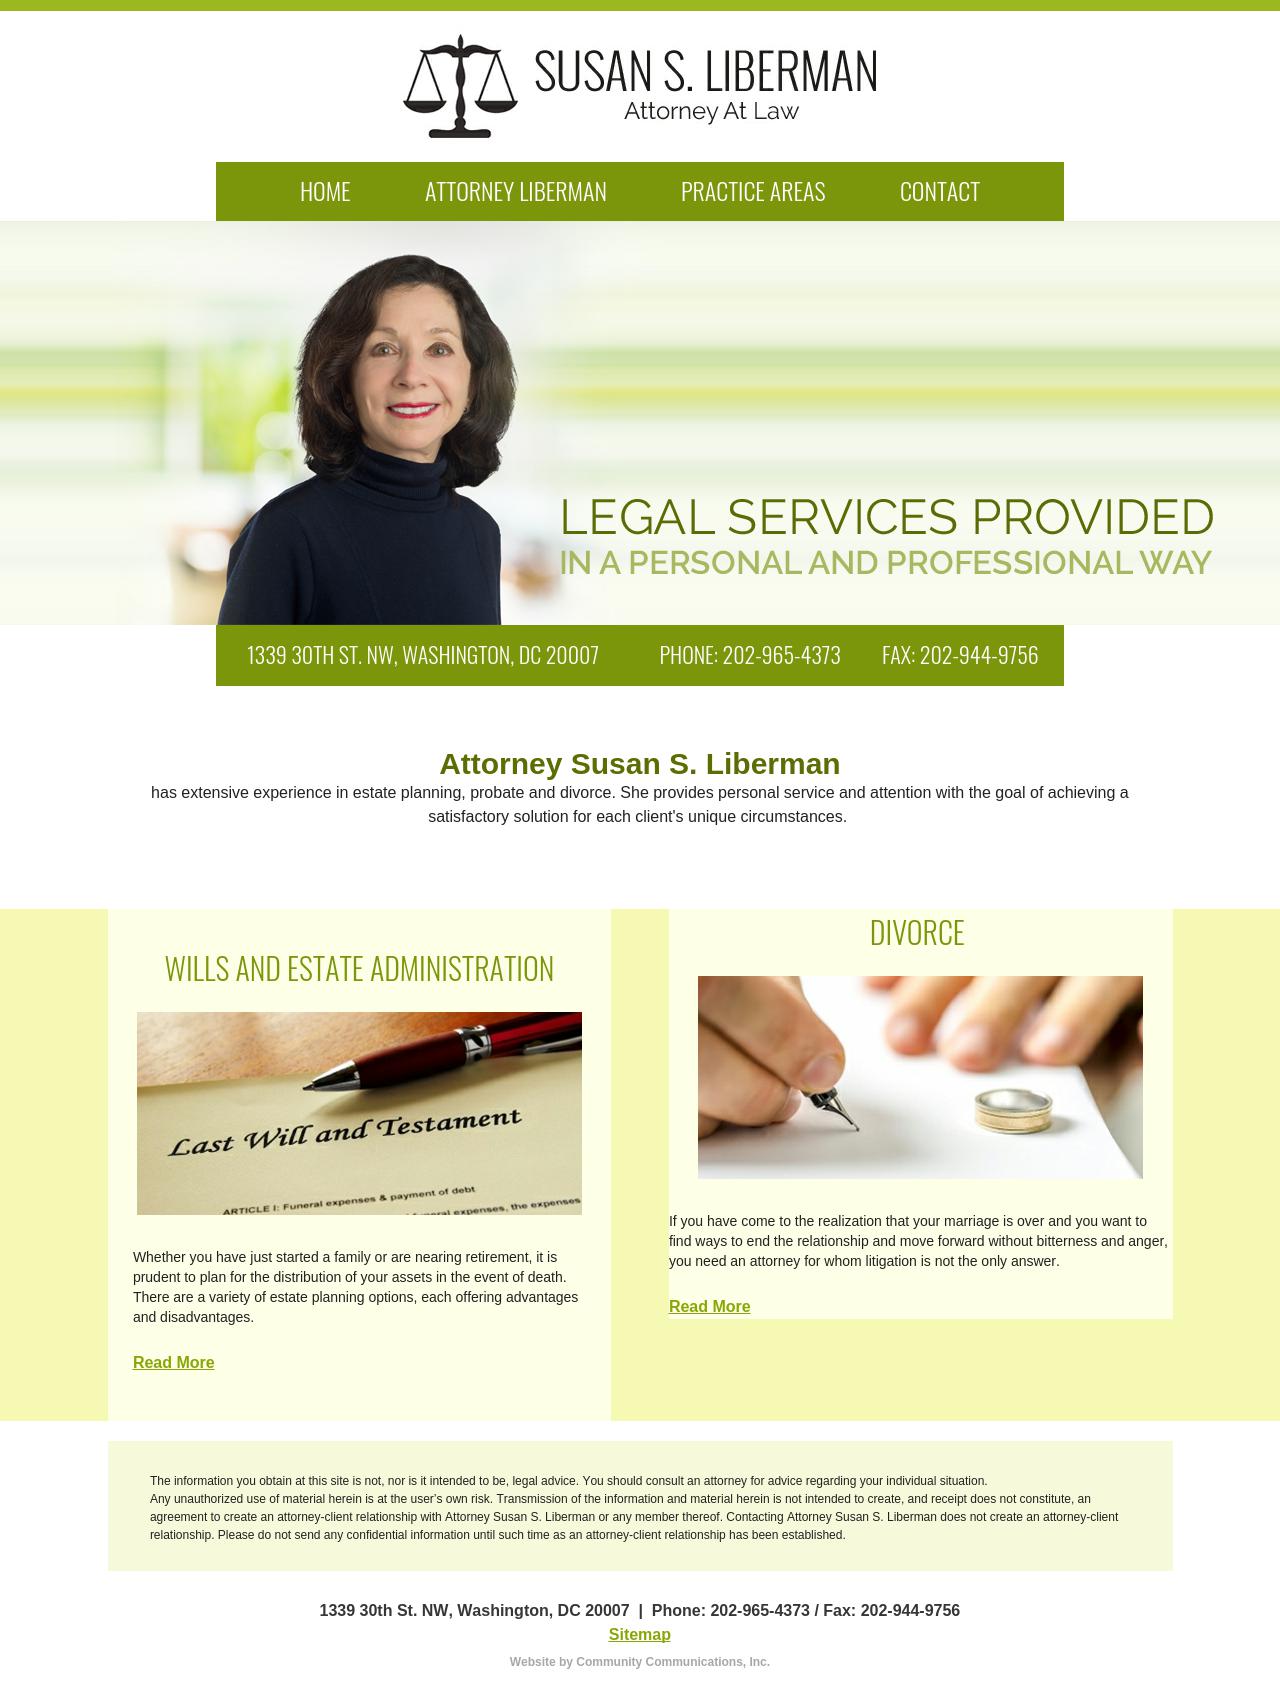 Susan S. Liberman, Attorney at Law - Washington DC Lawyers